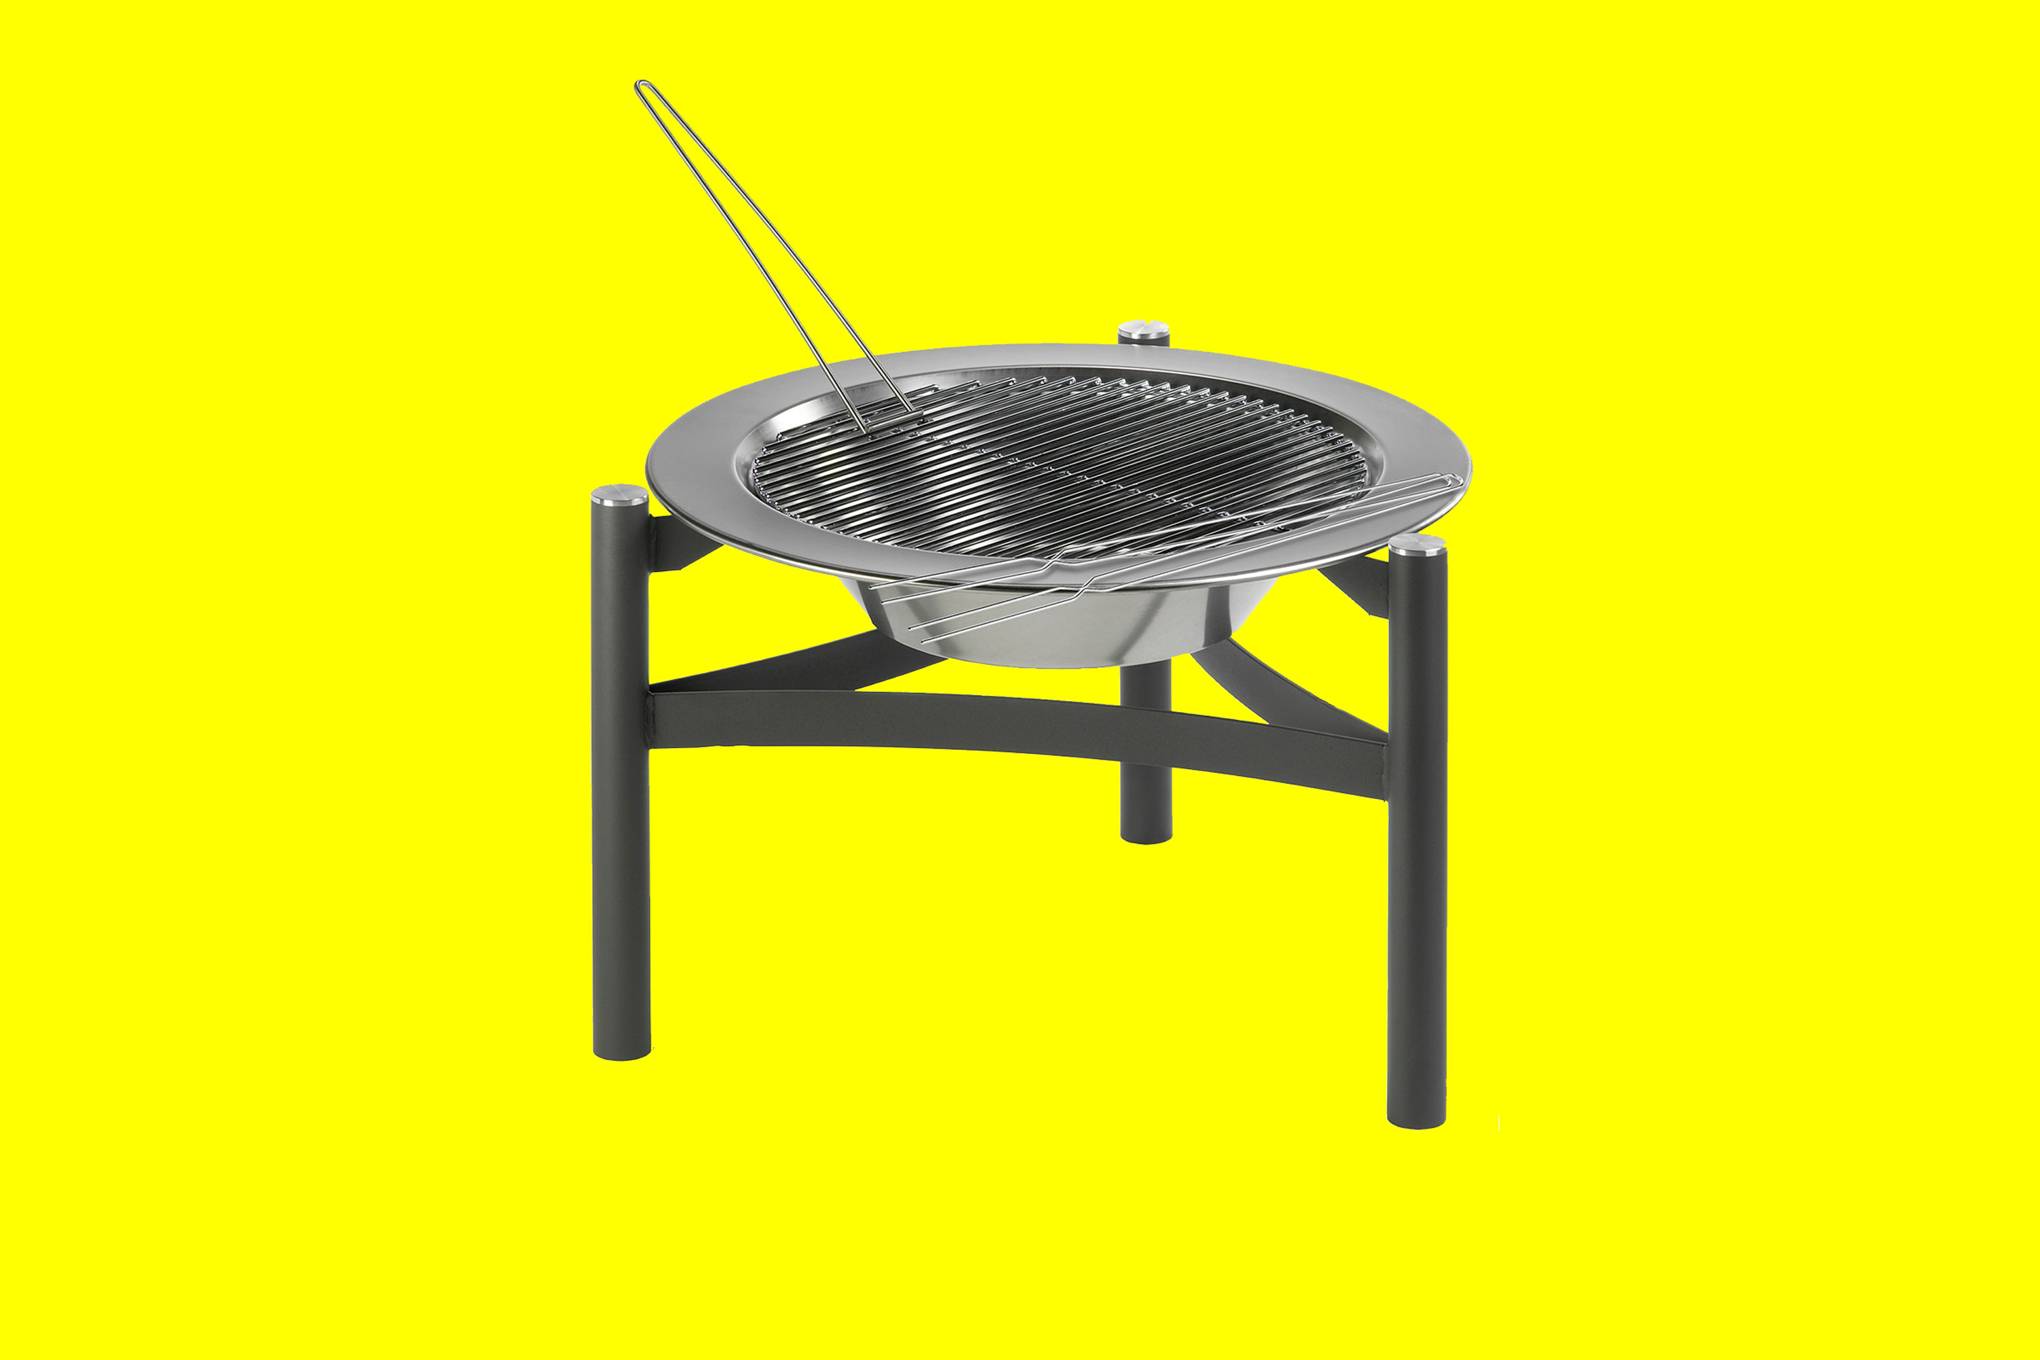 bar b.q.s 45/ cm diameter Cooking Grid